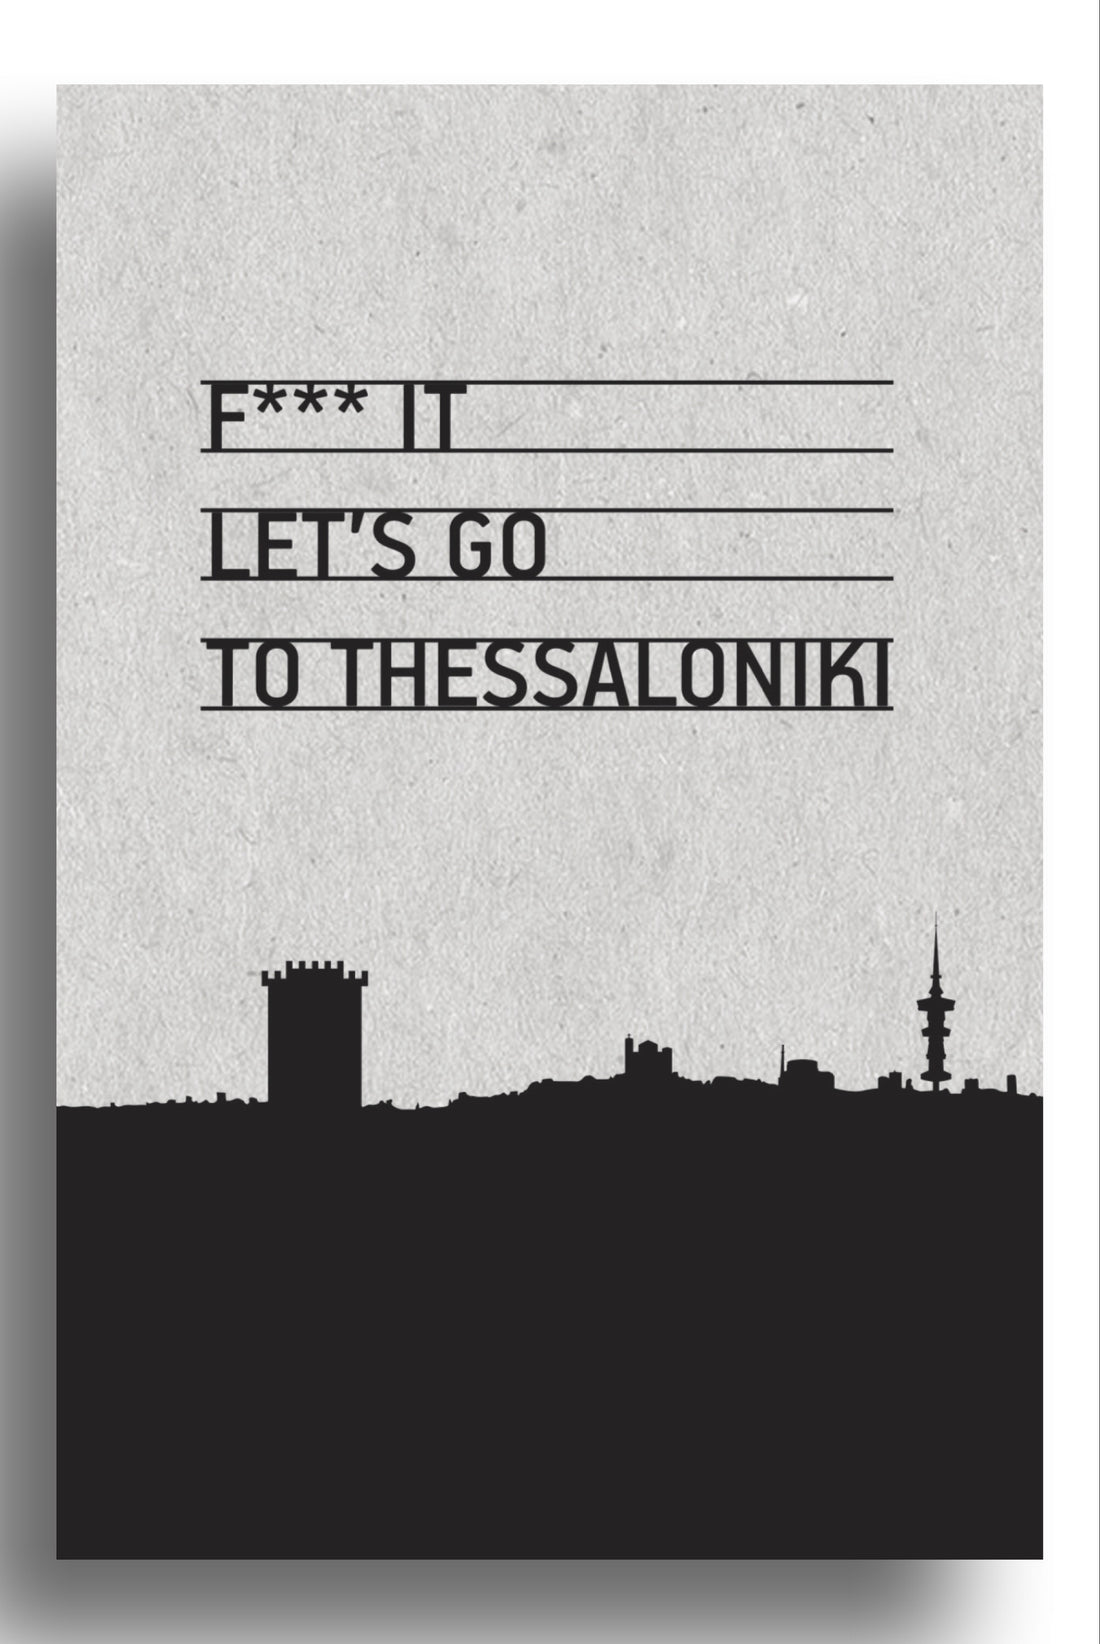 F**k let's go to Thessaloniki | art print